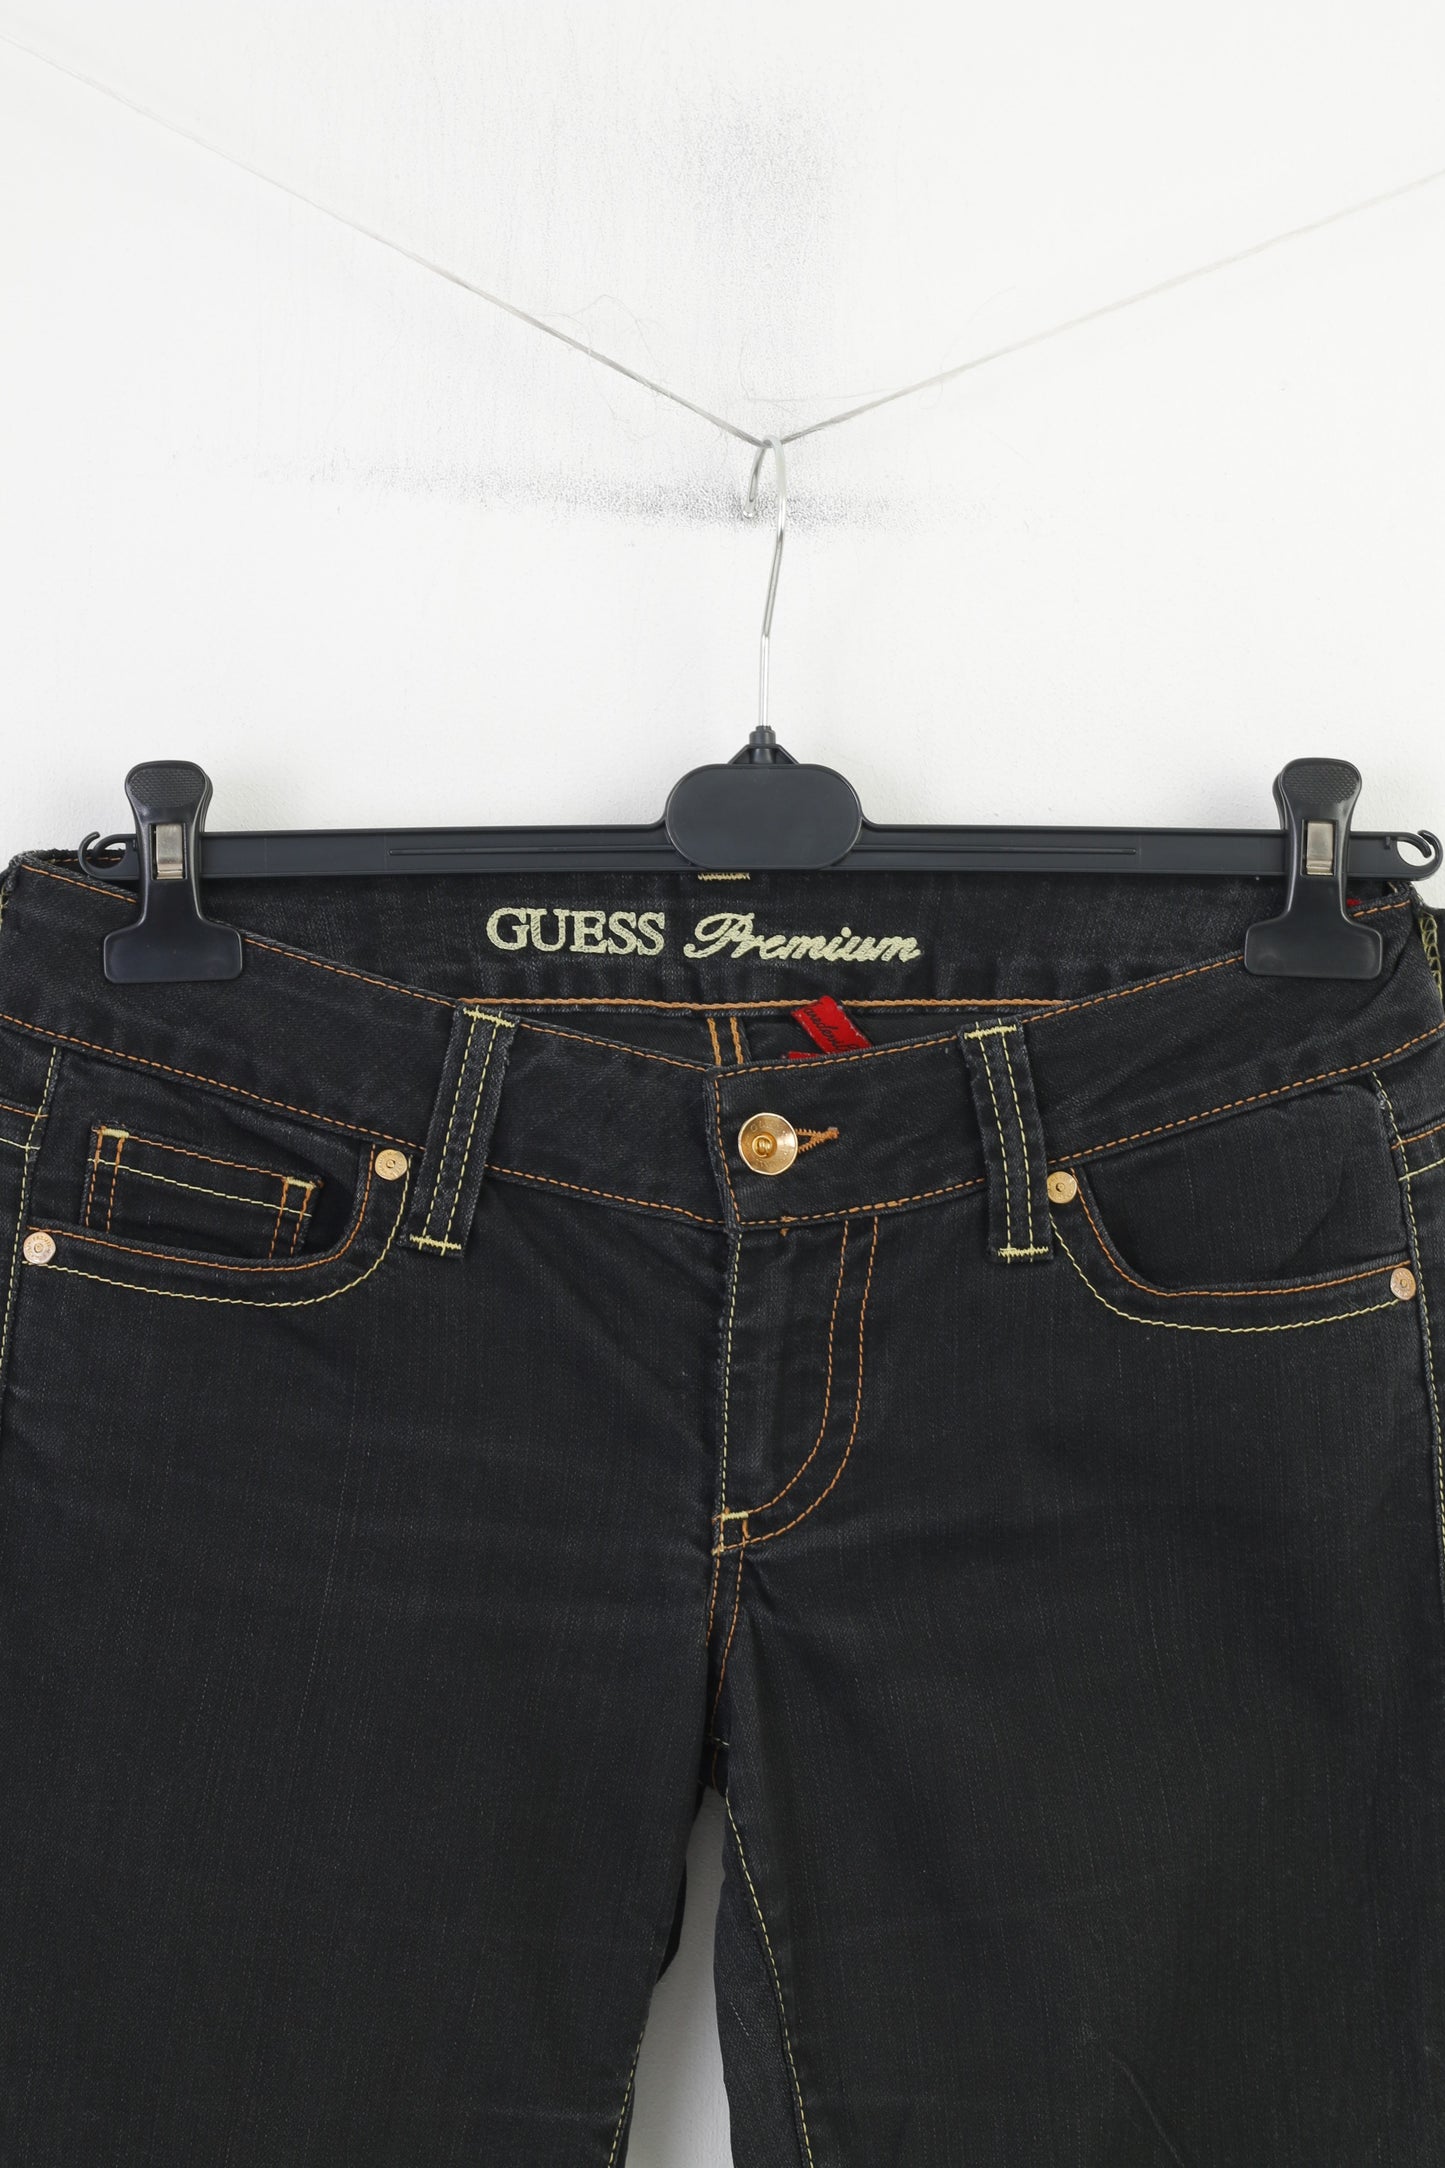 GUESS Premium Femme 30 Jeans Pantalon Marine Coton Jambe Droite Denim Pantalon Vintage 